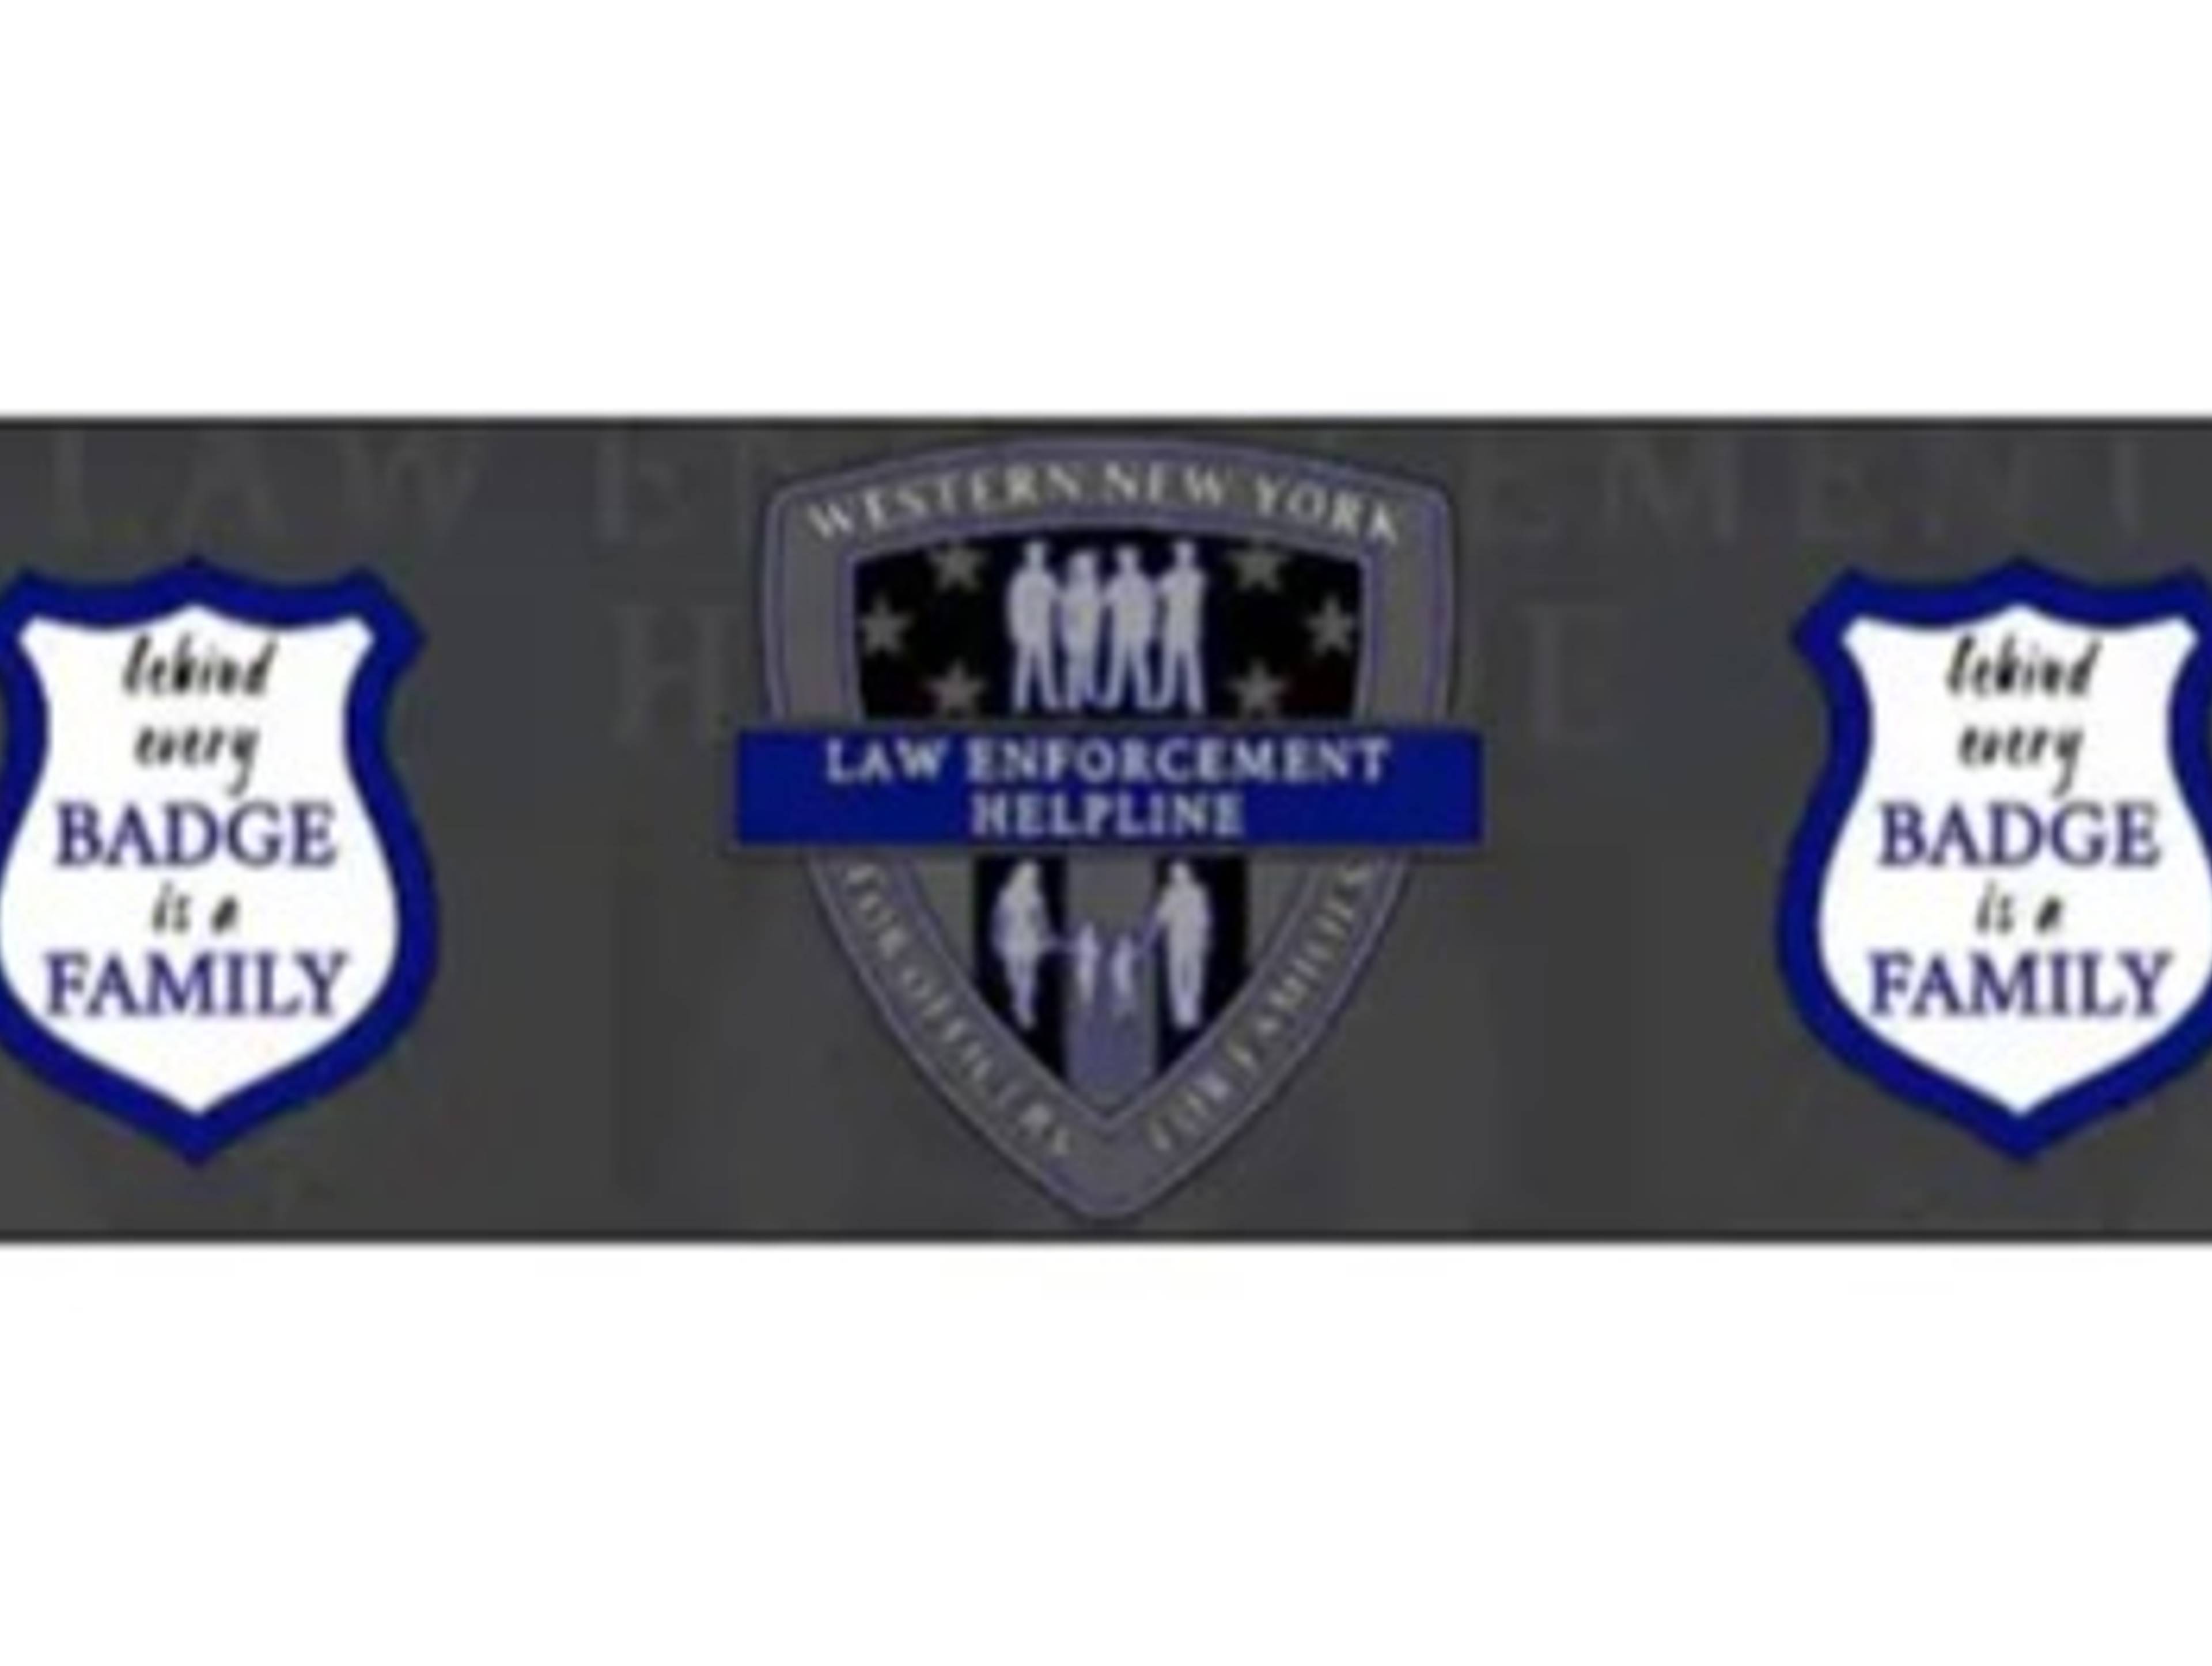 Western New York Law Enforcement Helpline Inc